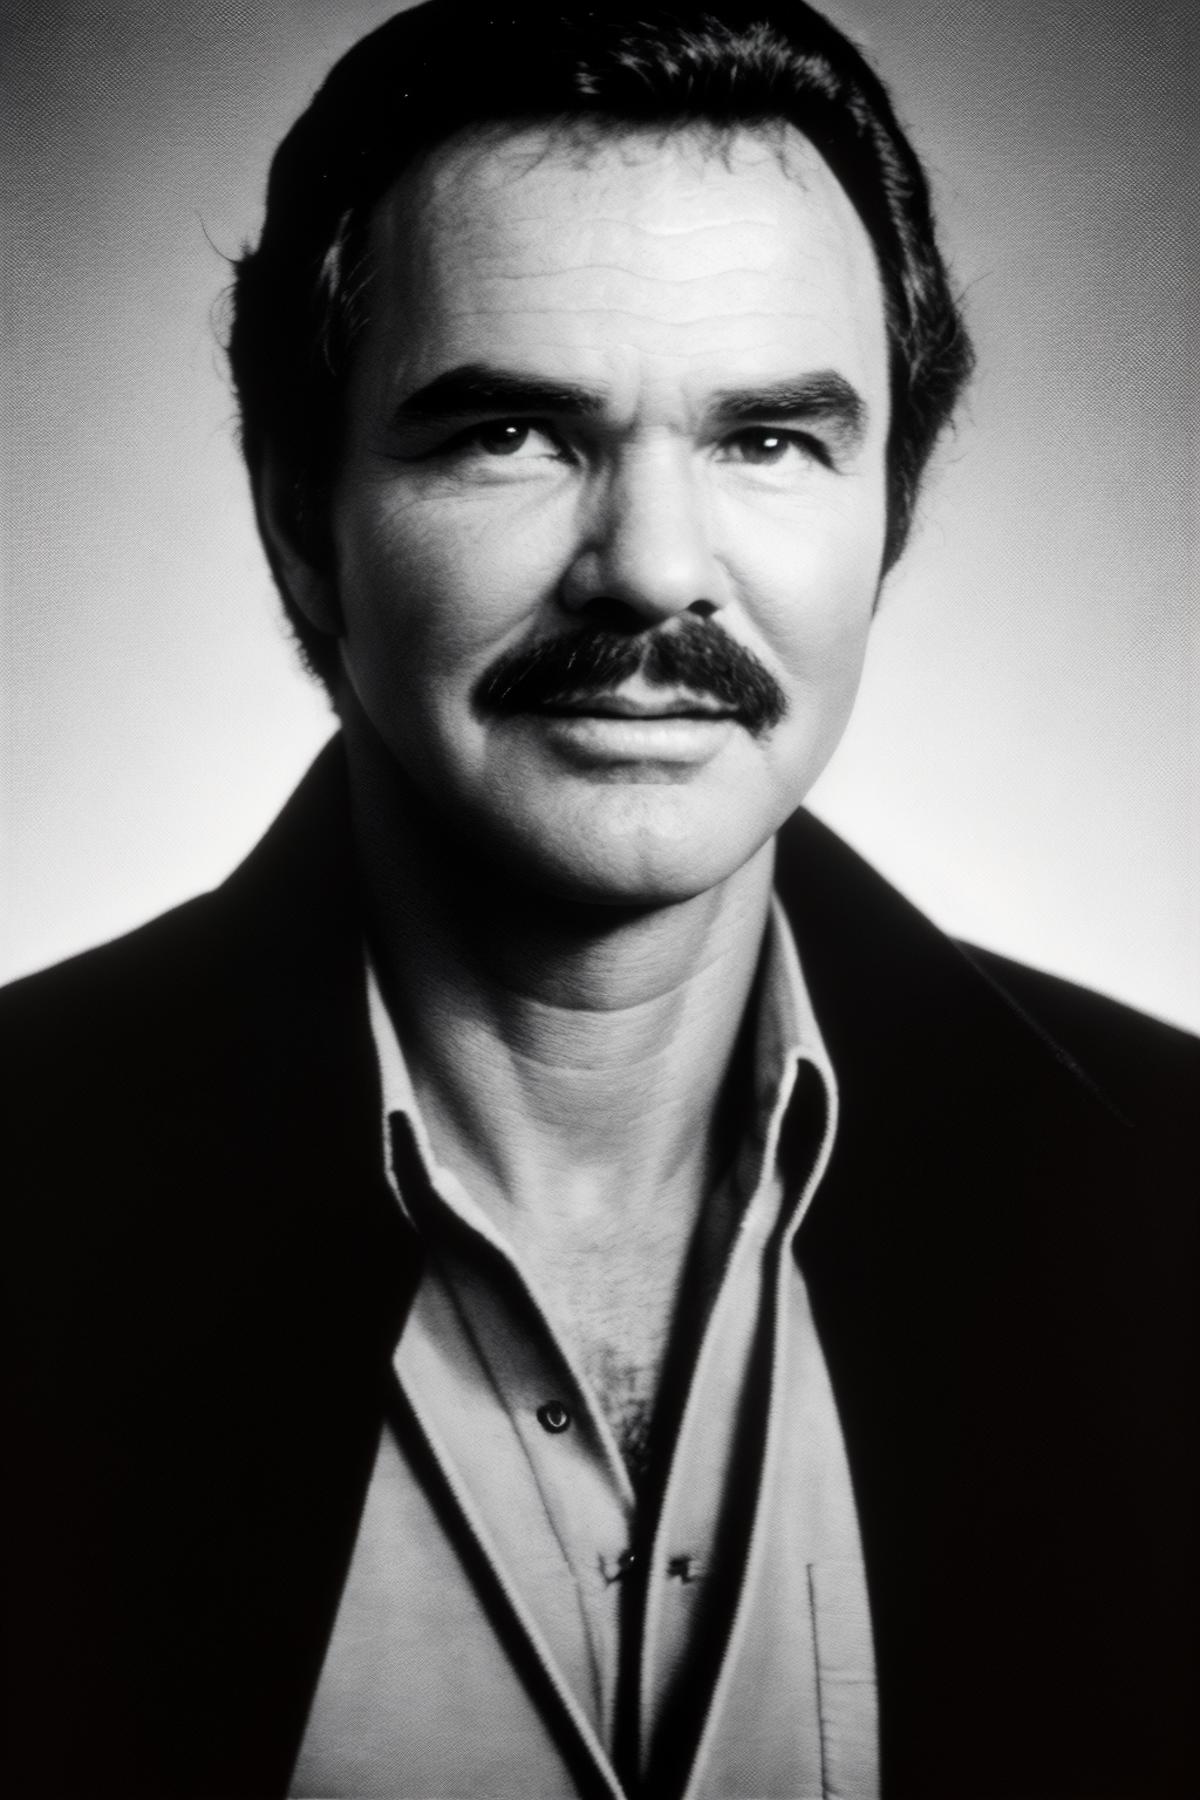 Actor: Burt Reynolds image by trdahl